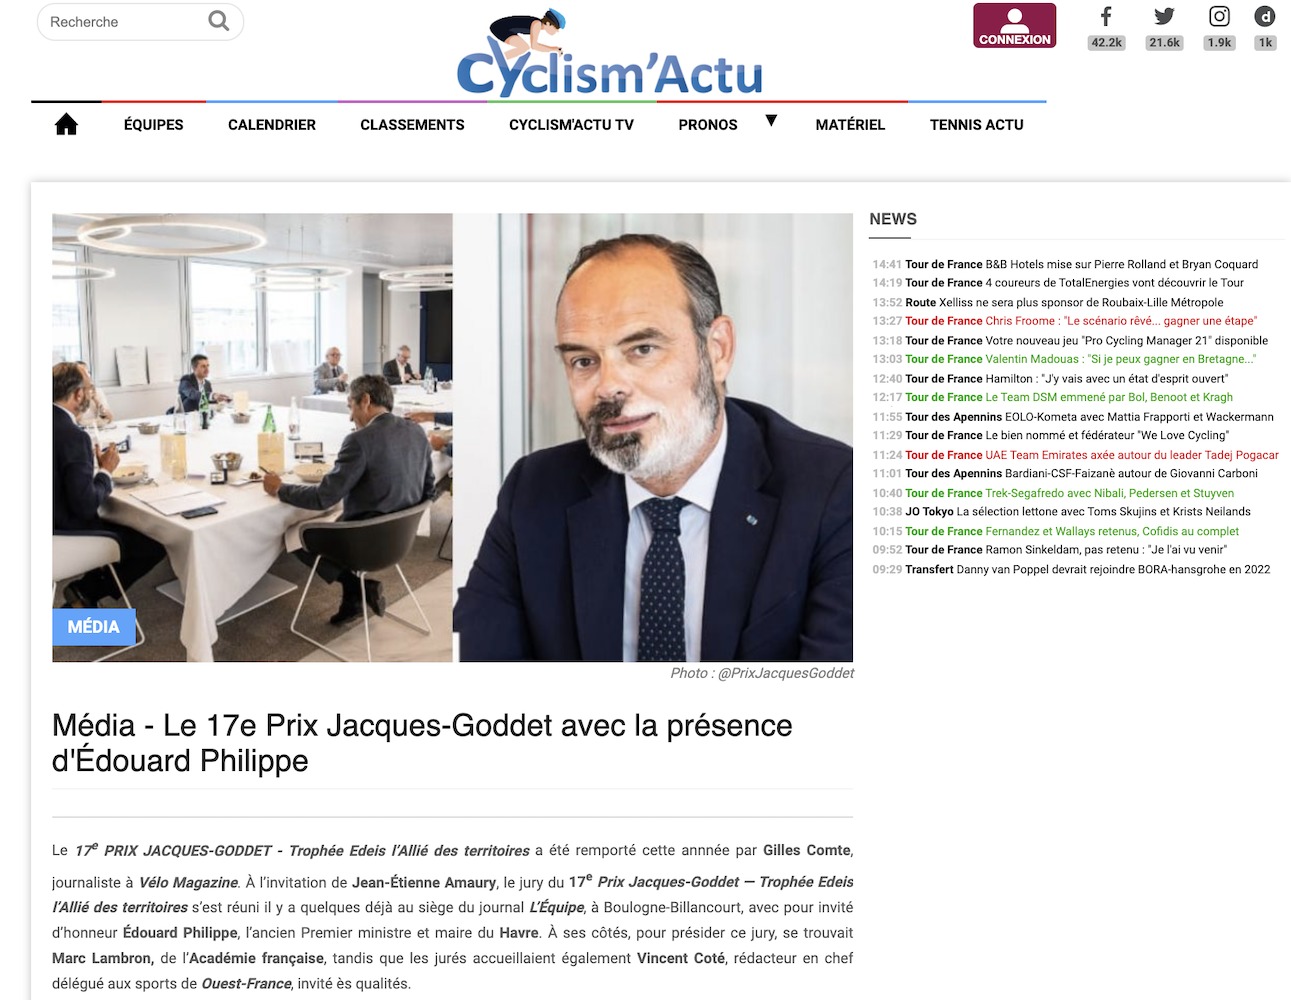 Cyclism'Actu 17e Prix Jacques-Goddet